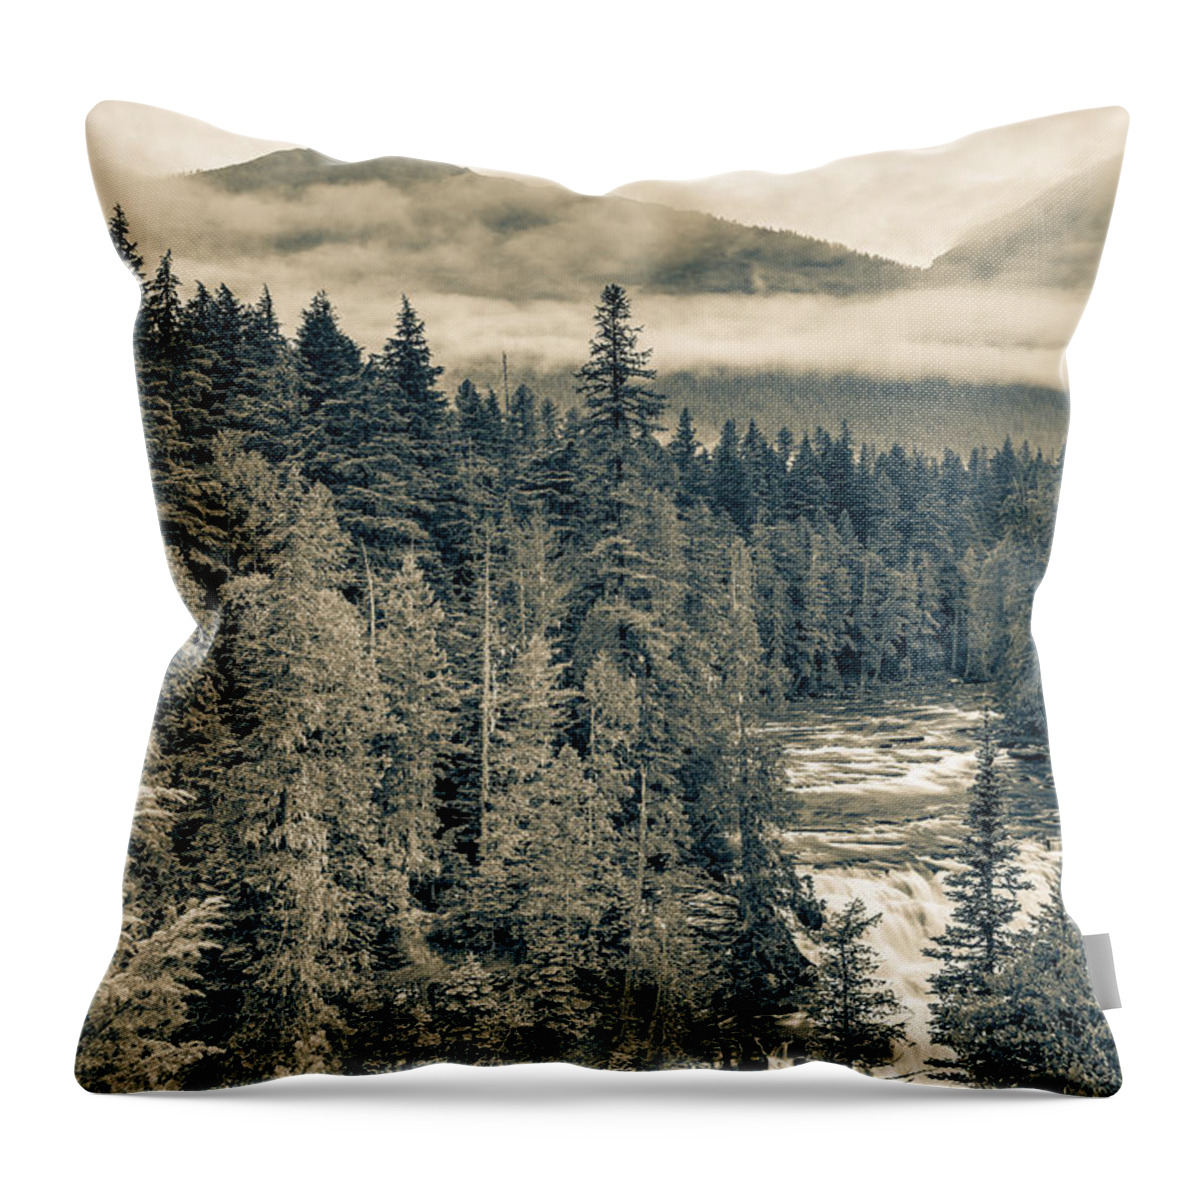 Glacier National Park Throw Pillow featuring the photograph McDonald Creek Horizontal by Adam Mateo Fierro